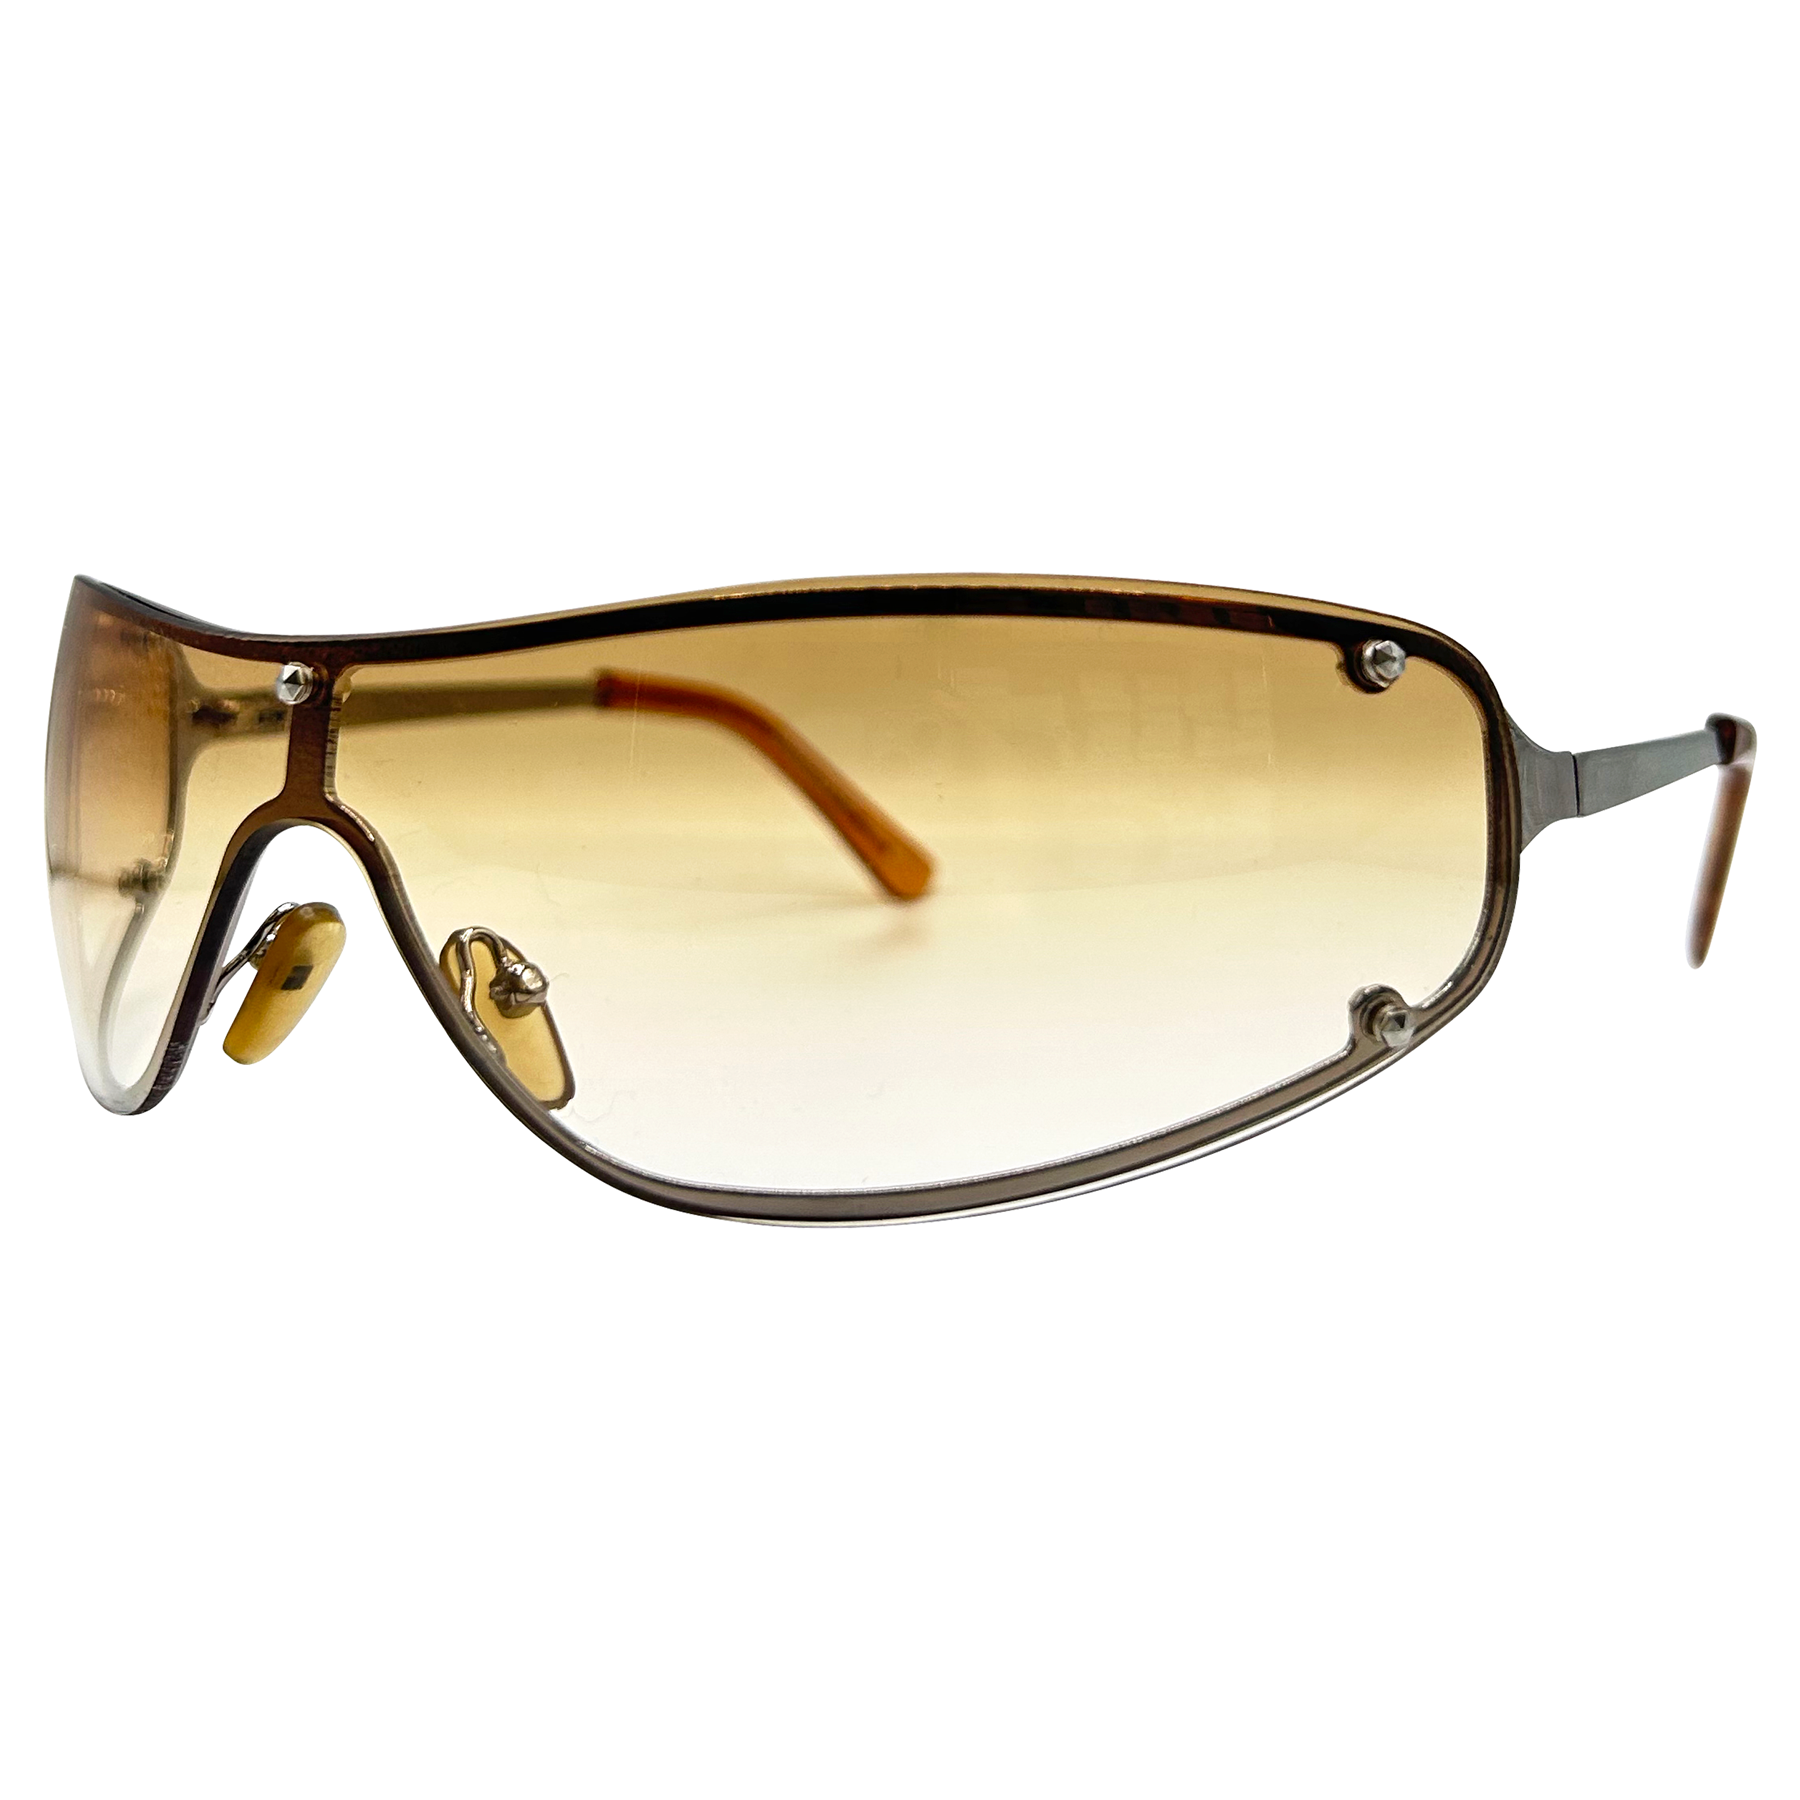 LITHIUM Futuristic Sunglasses *As Seen On: Jordyn Woods*